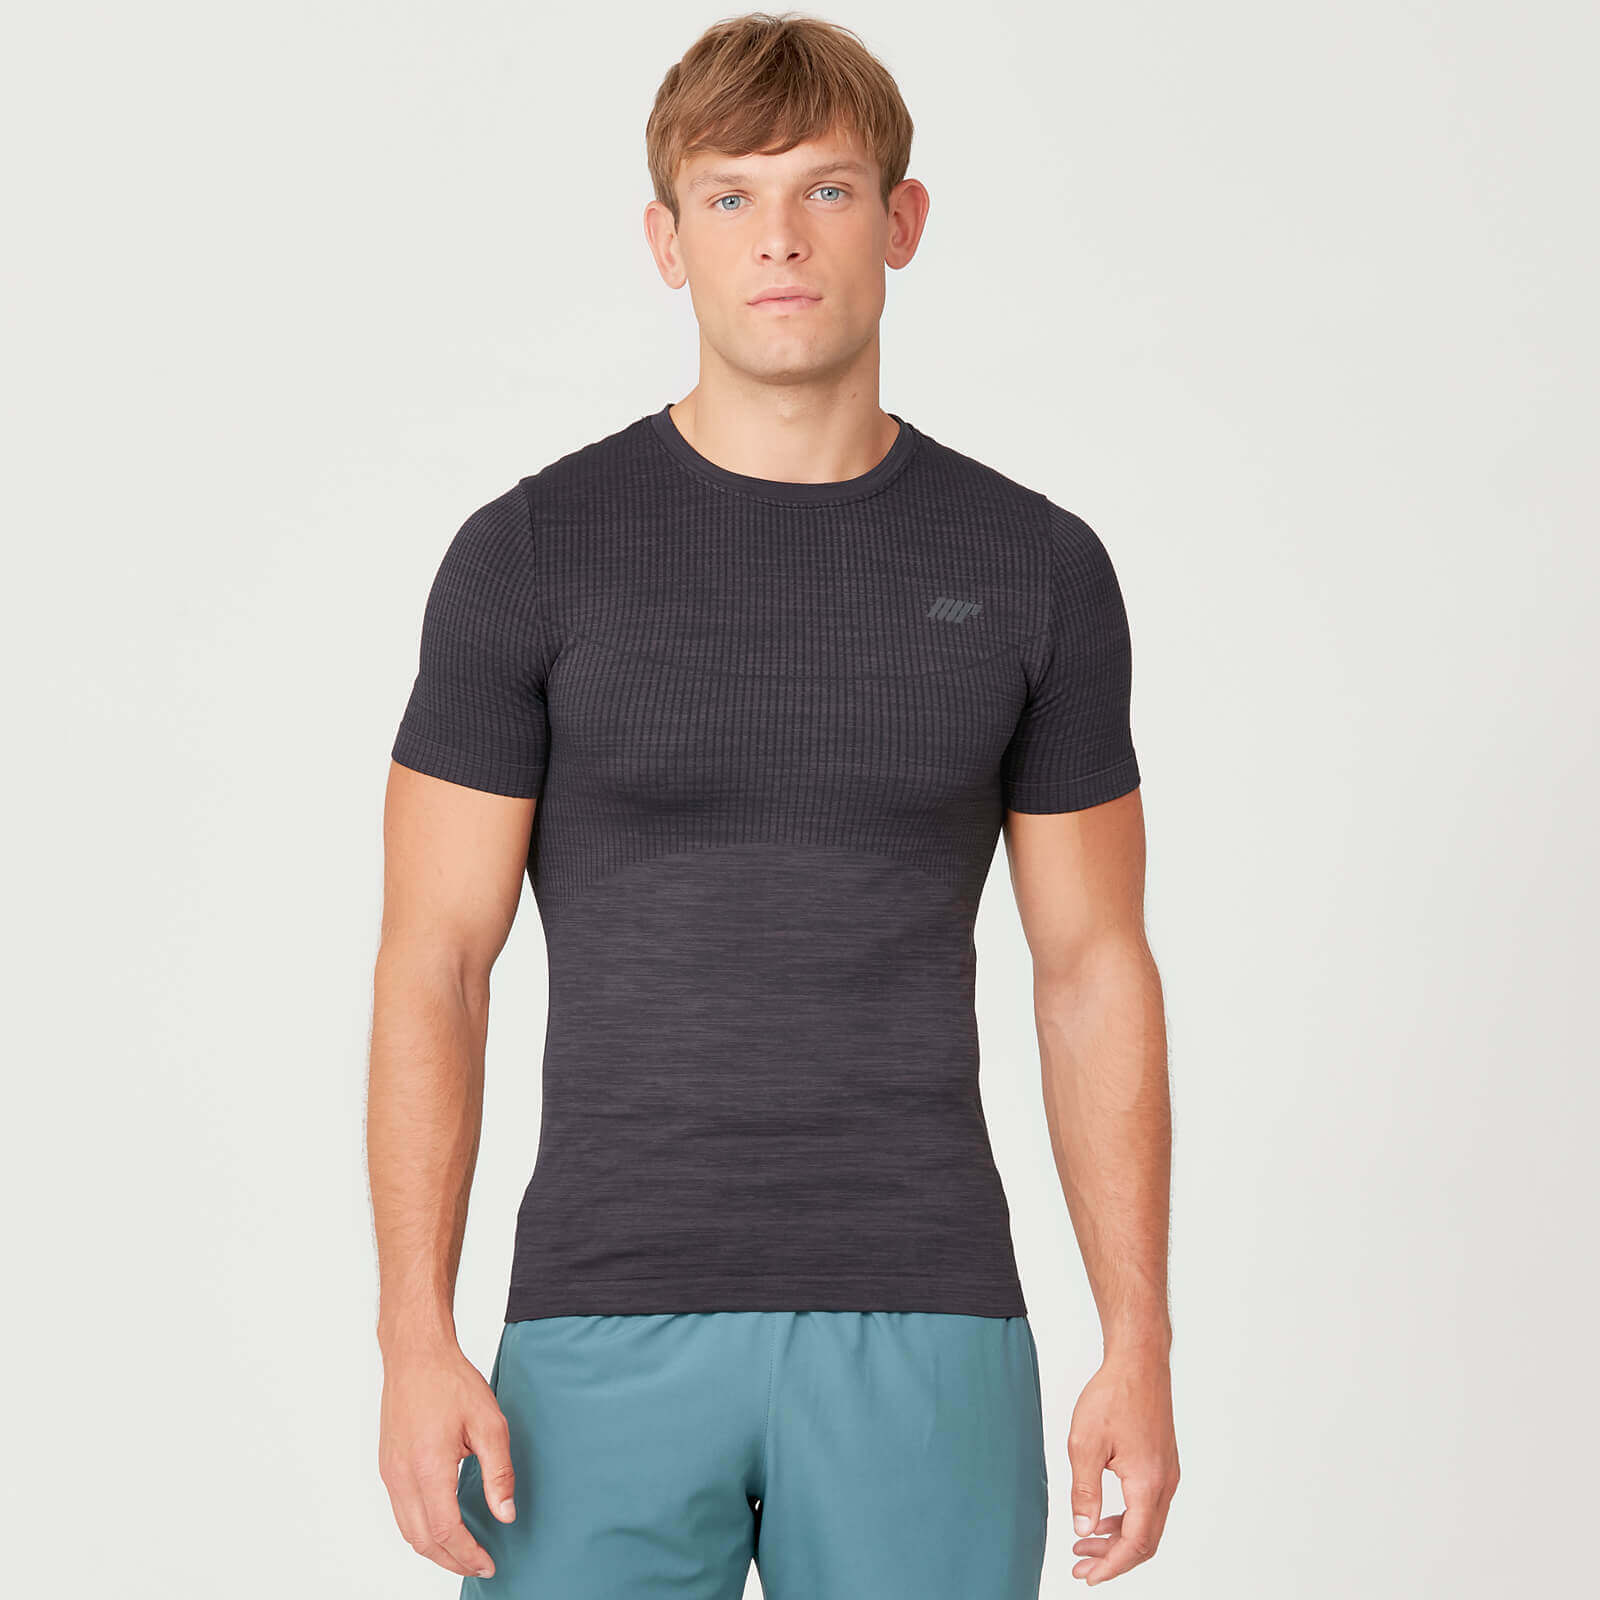 SEAMLESS 無縫系列 男士雕塑短袖T恤 - 灰色